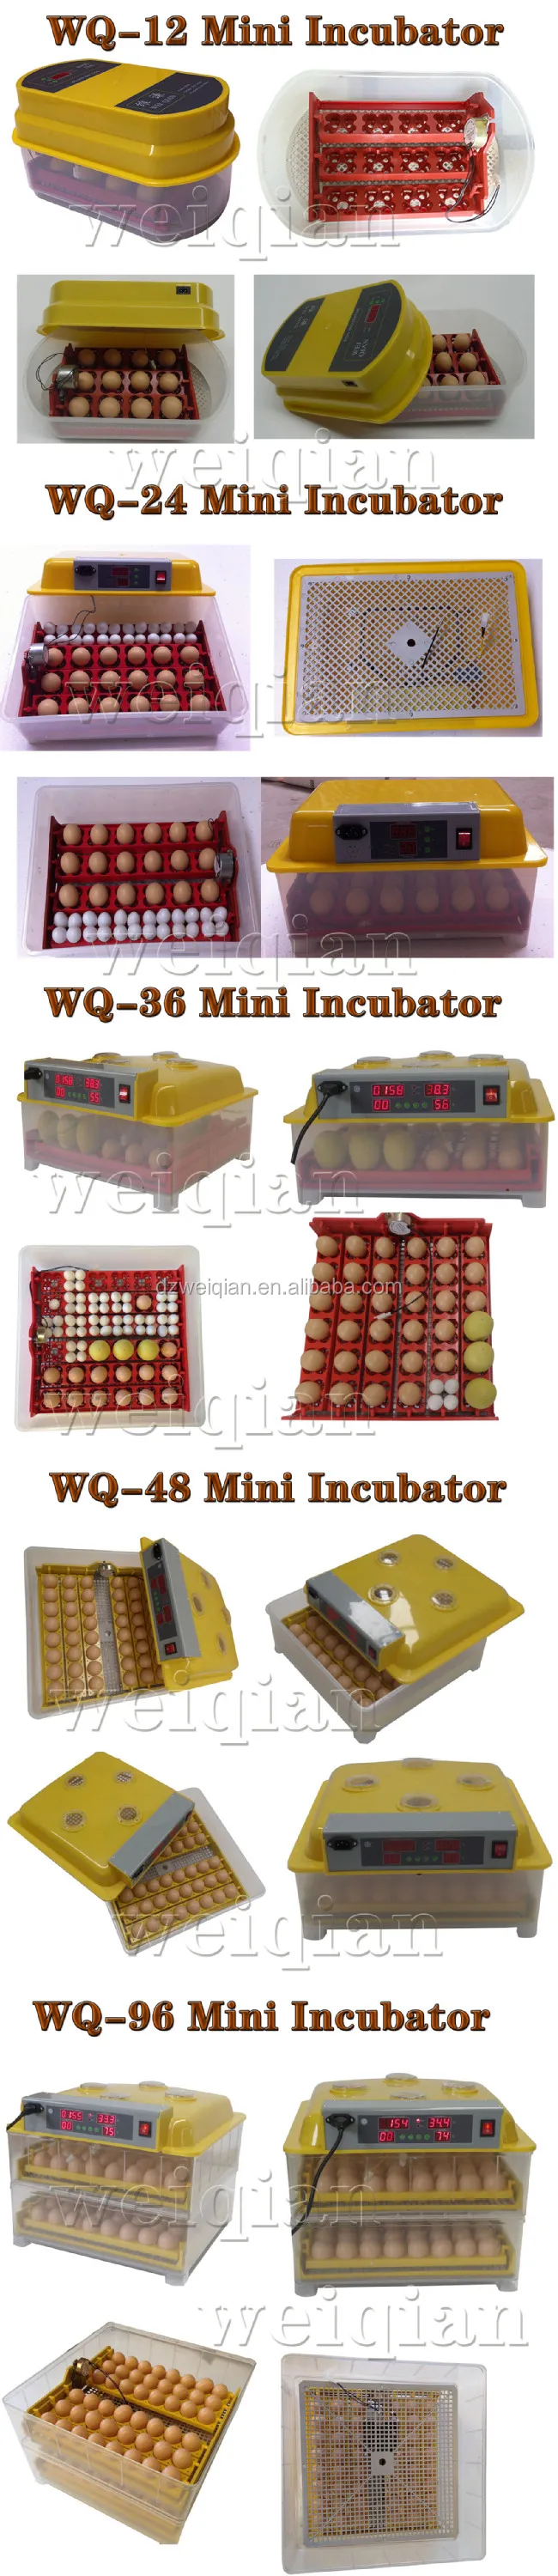 Full Automatic Egg Incubator Price For Sale,Weiqian Mini ...